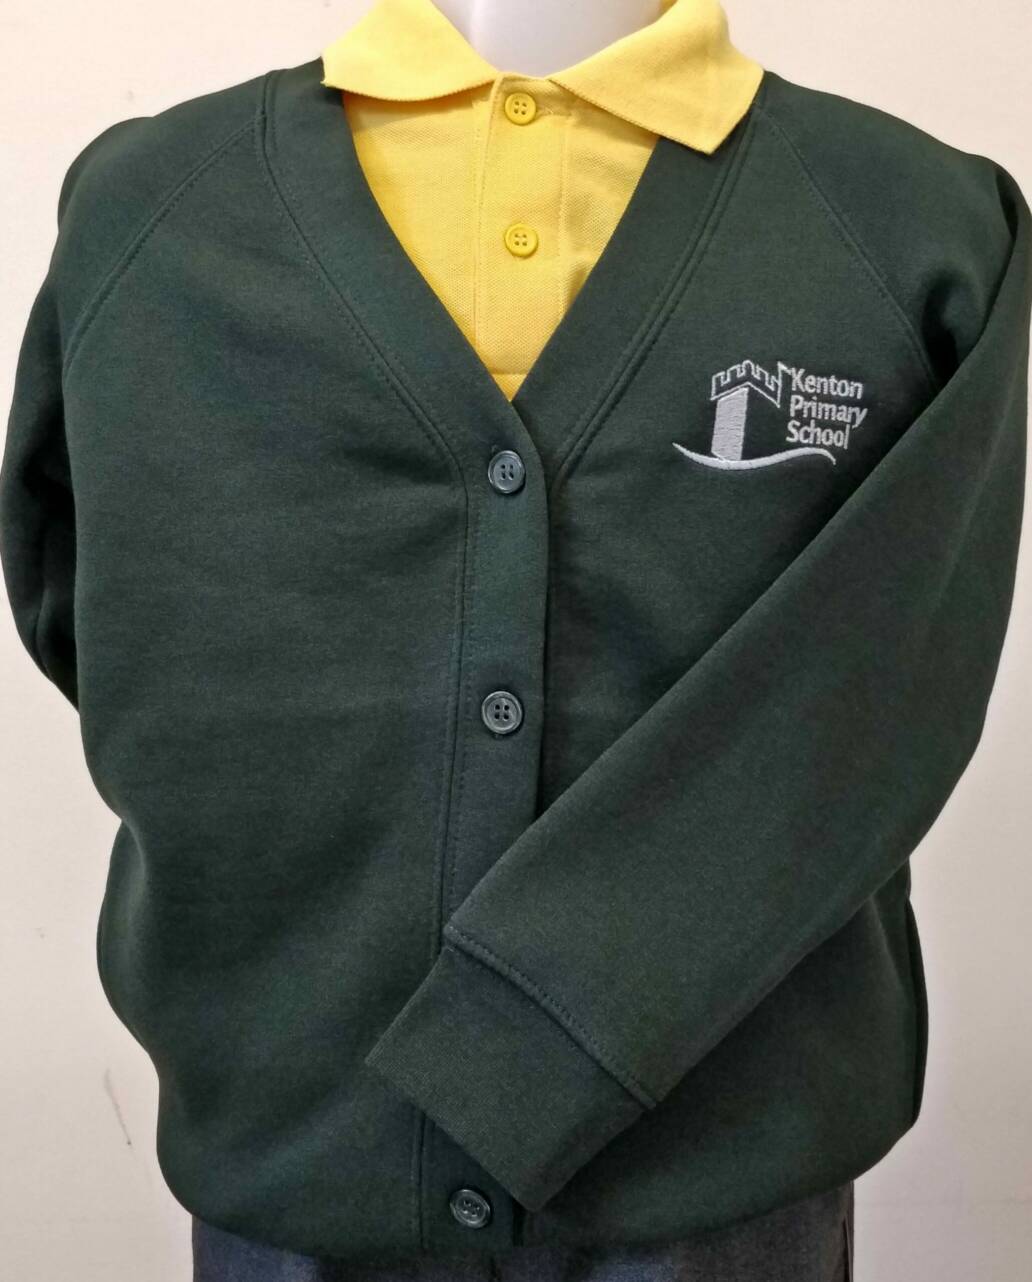 Kenton Primary School Sweatshirt Cardigan